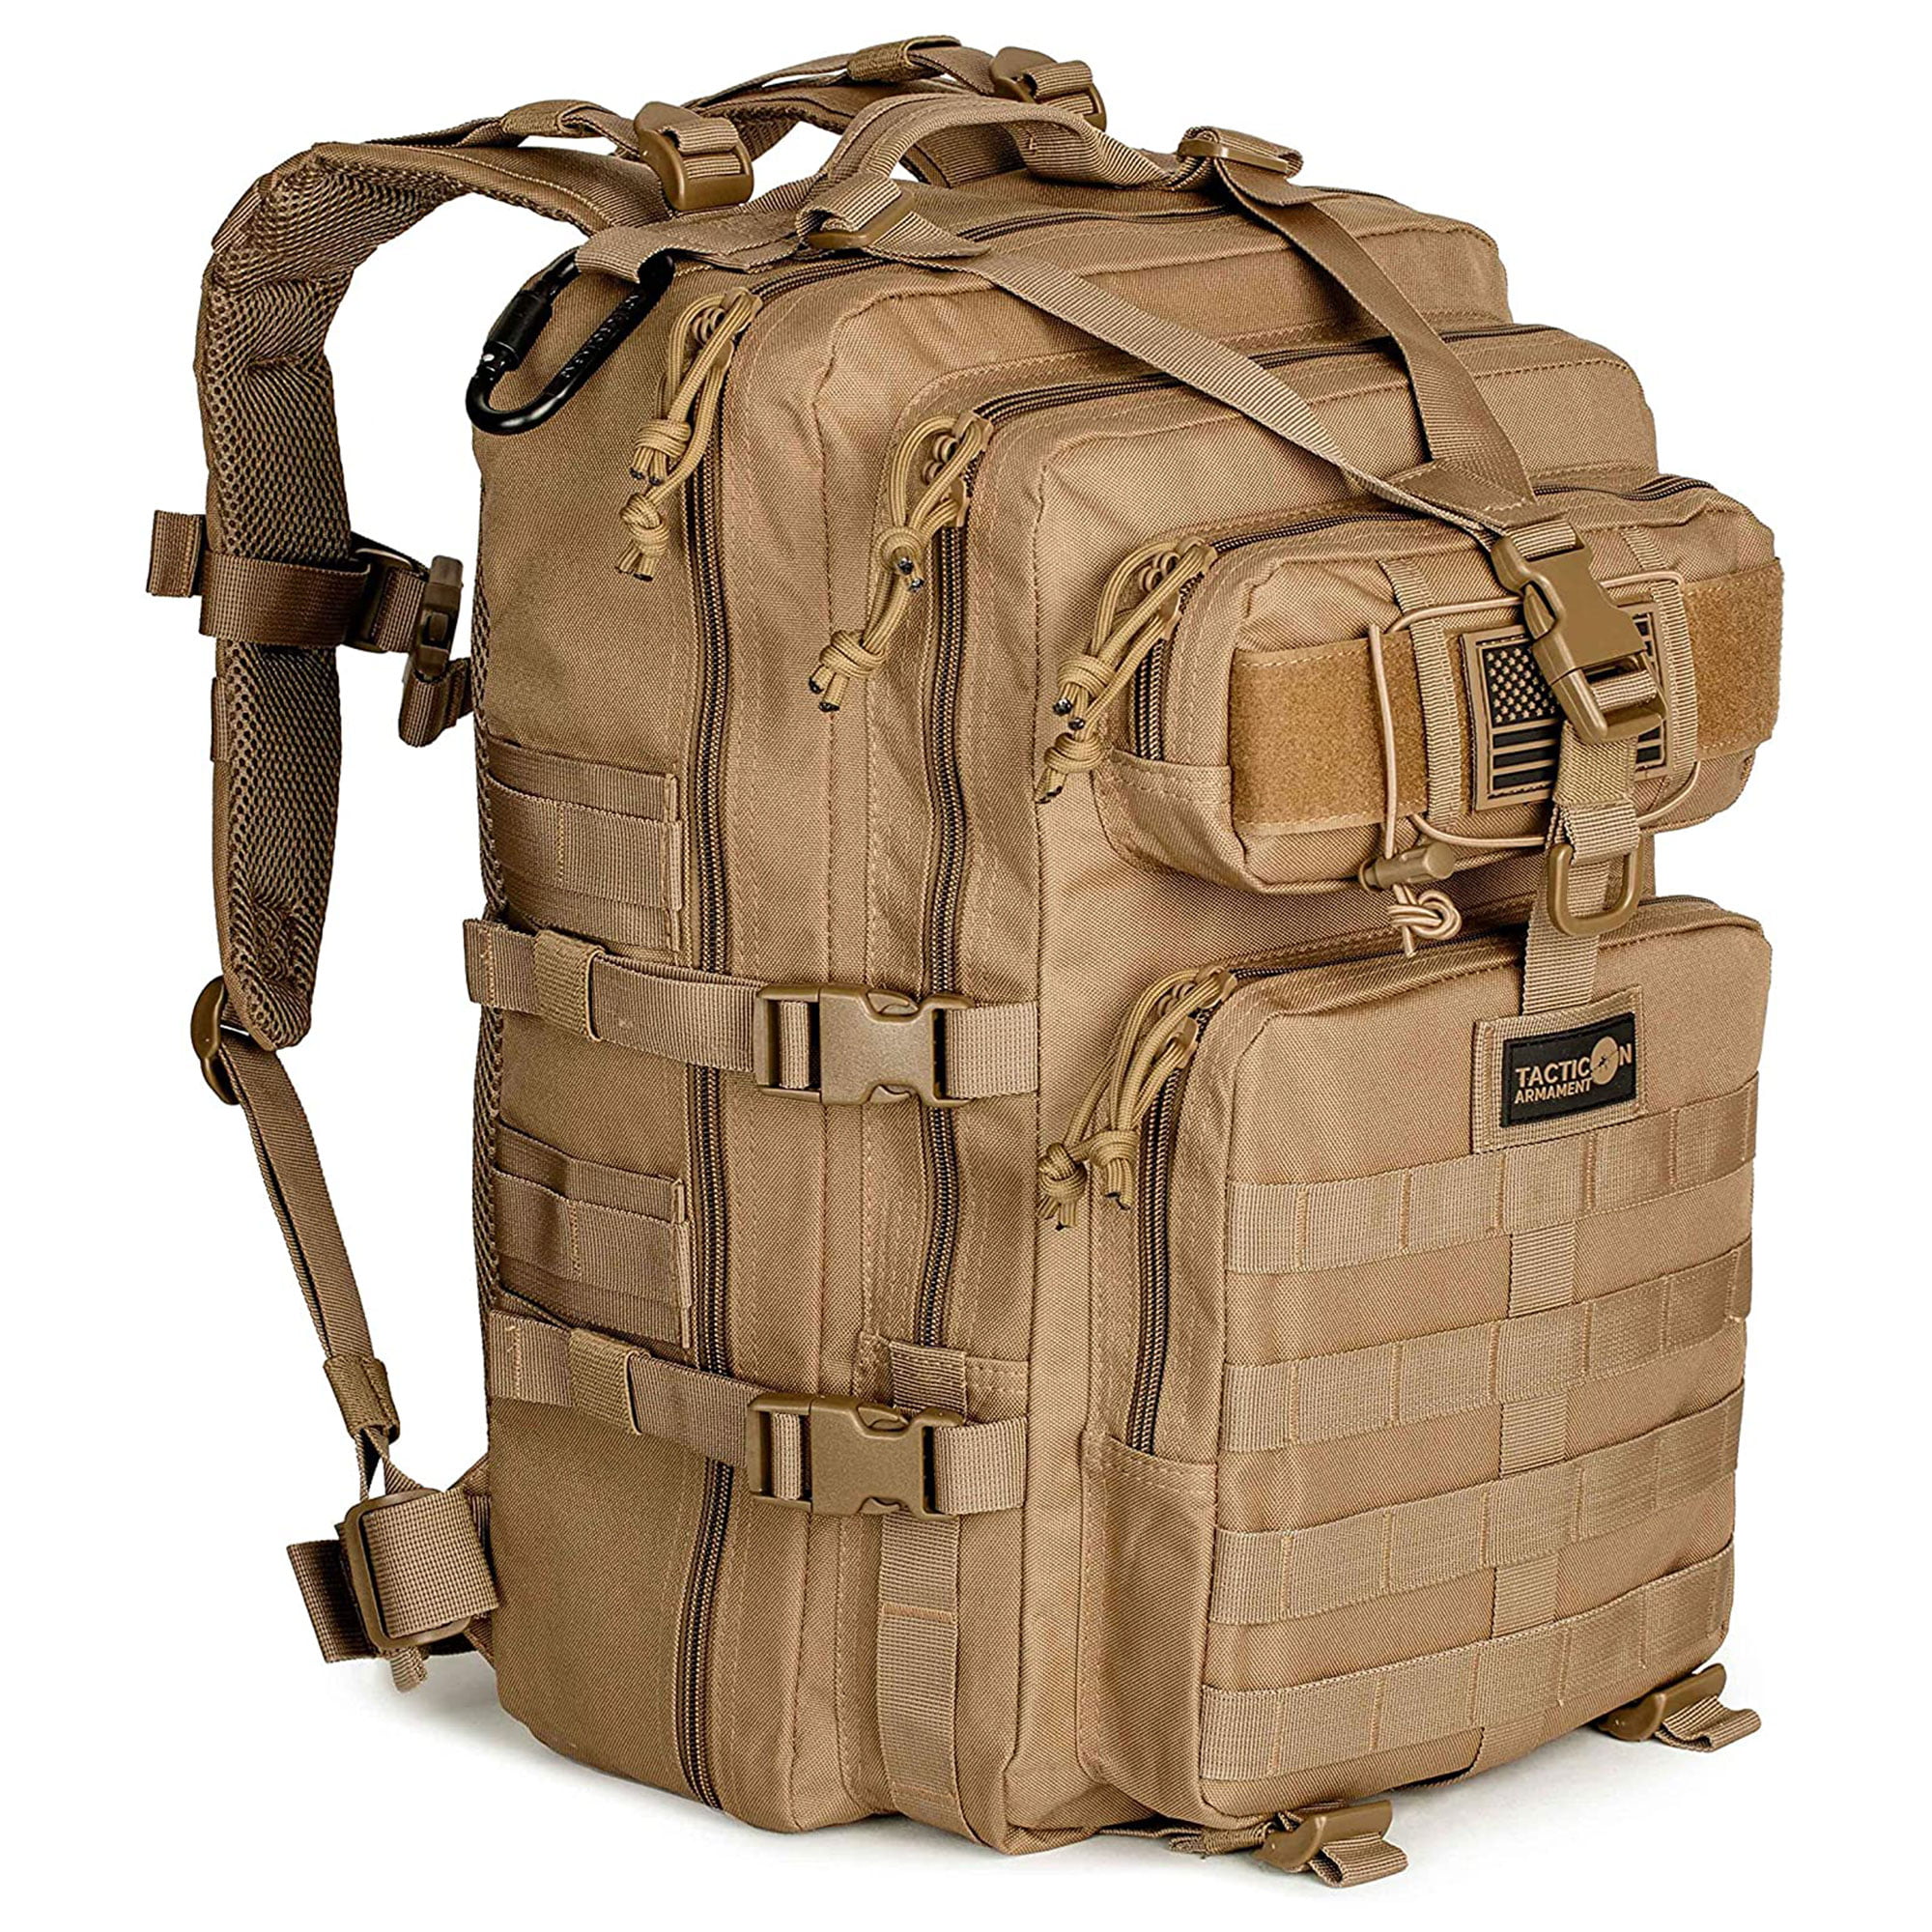 Tacticon Armament 24BattlePack 1 to 3 Day Tactical Assault Backpack, Tan -  Walmart.com